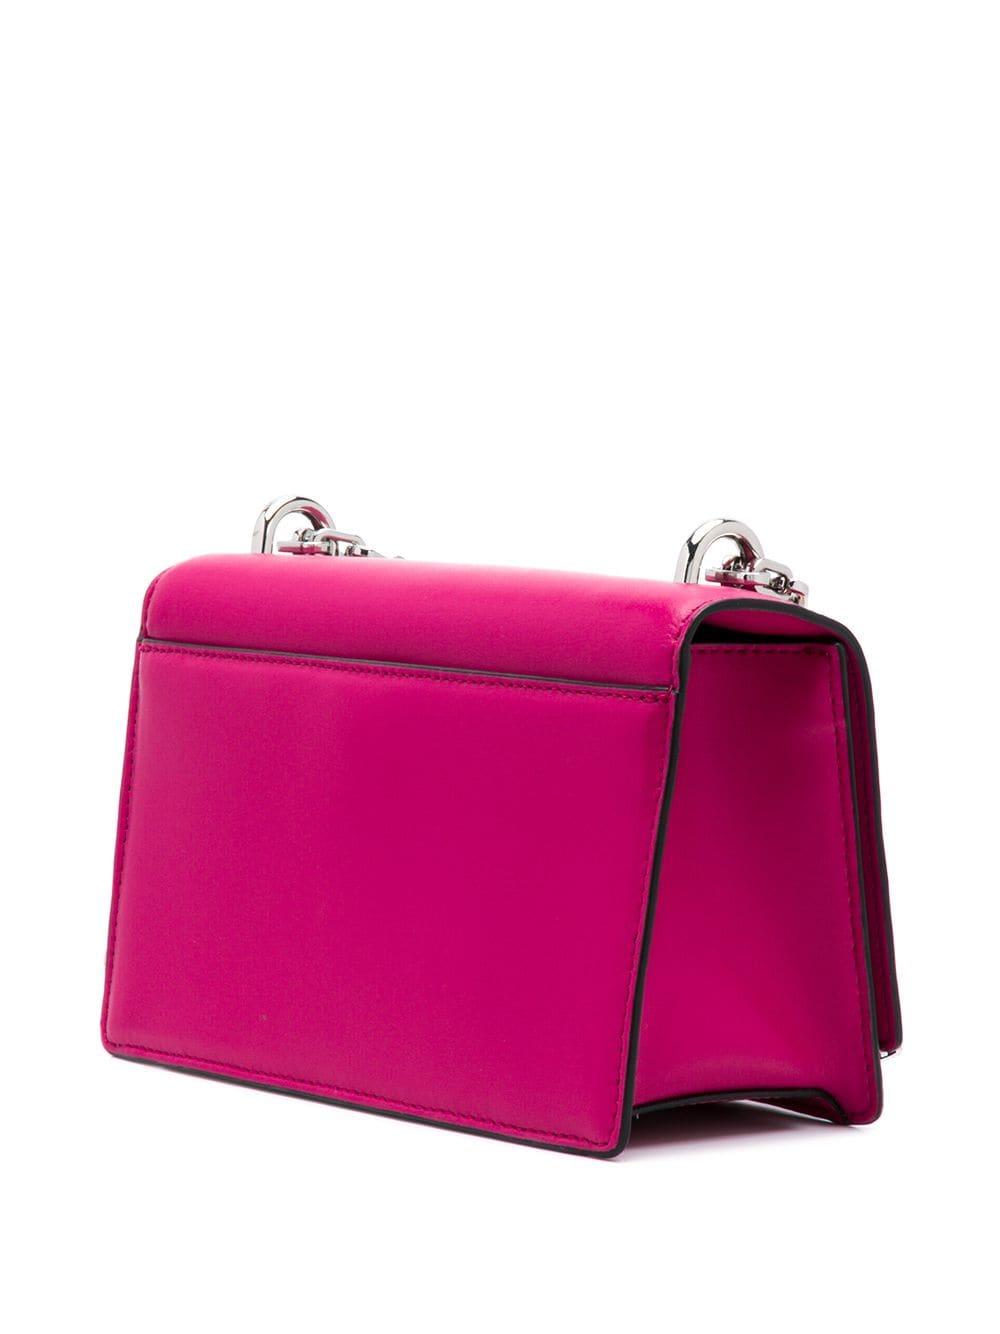 Karl Lagerfeld Signature Small Bag in Pink | Lyst Australia